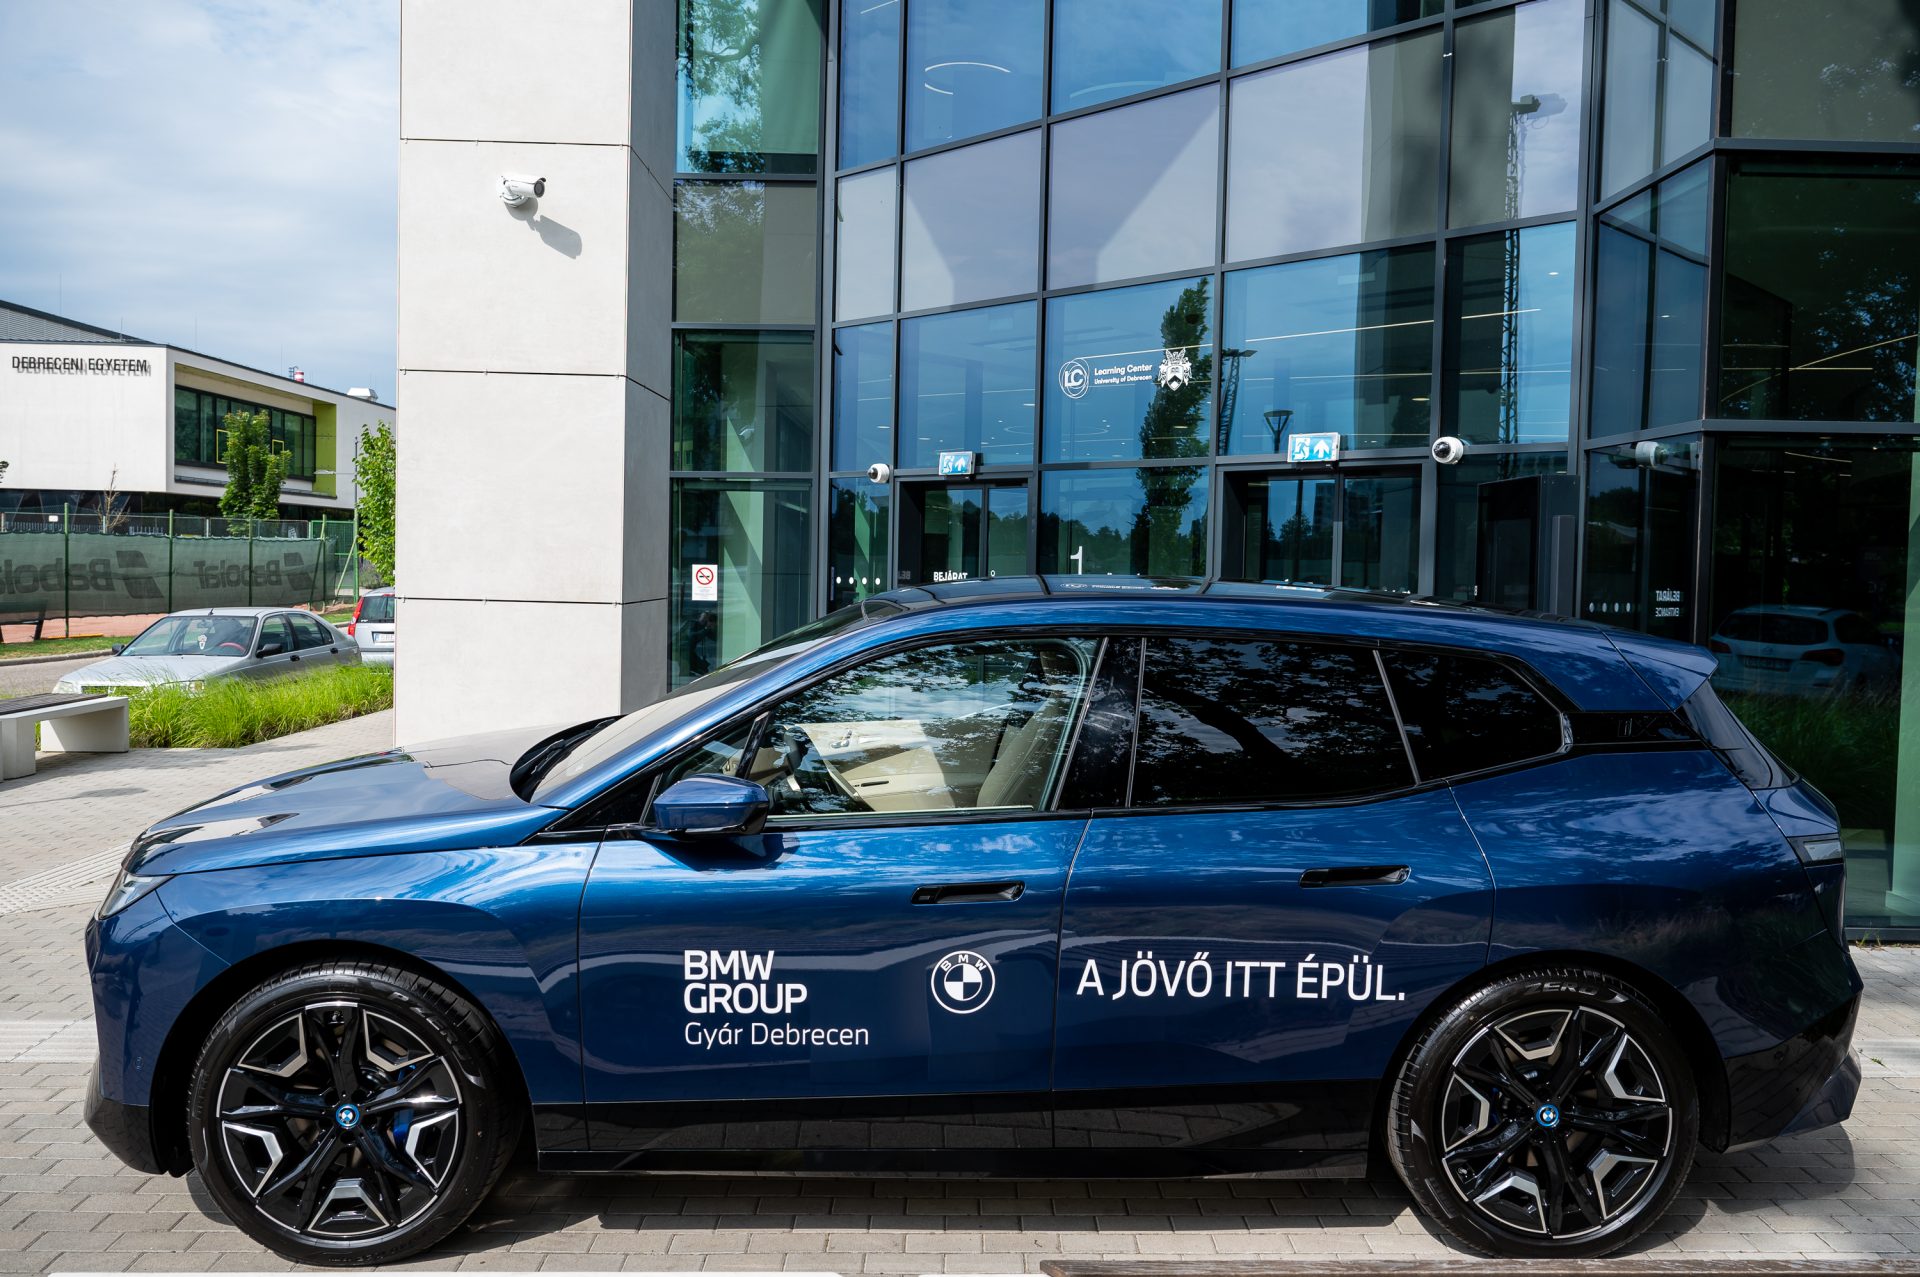 Bmw car with BMW Group Plant Debrecen stickers on it